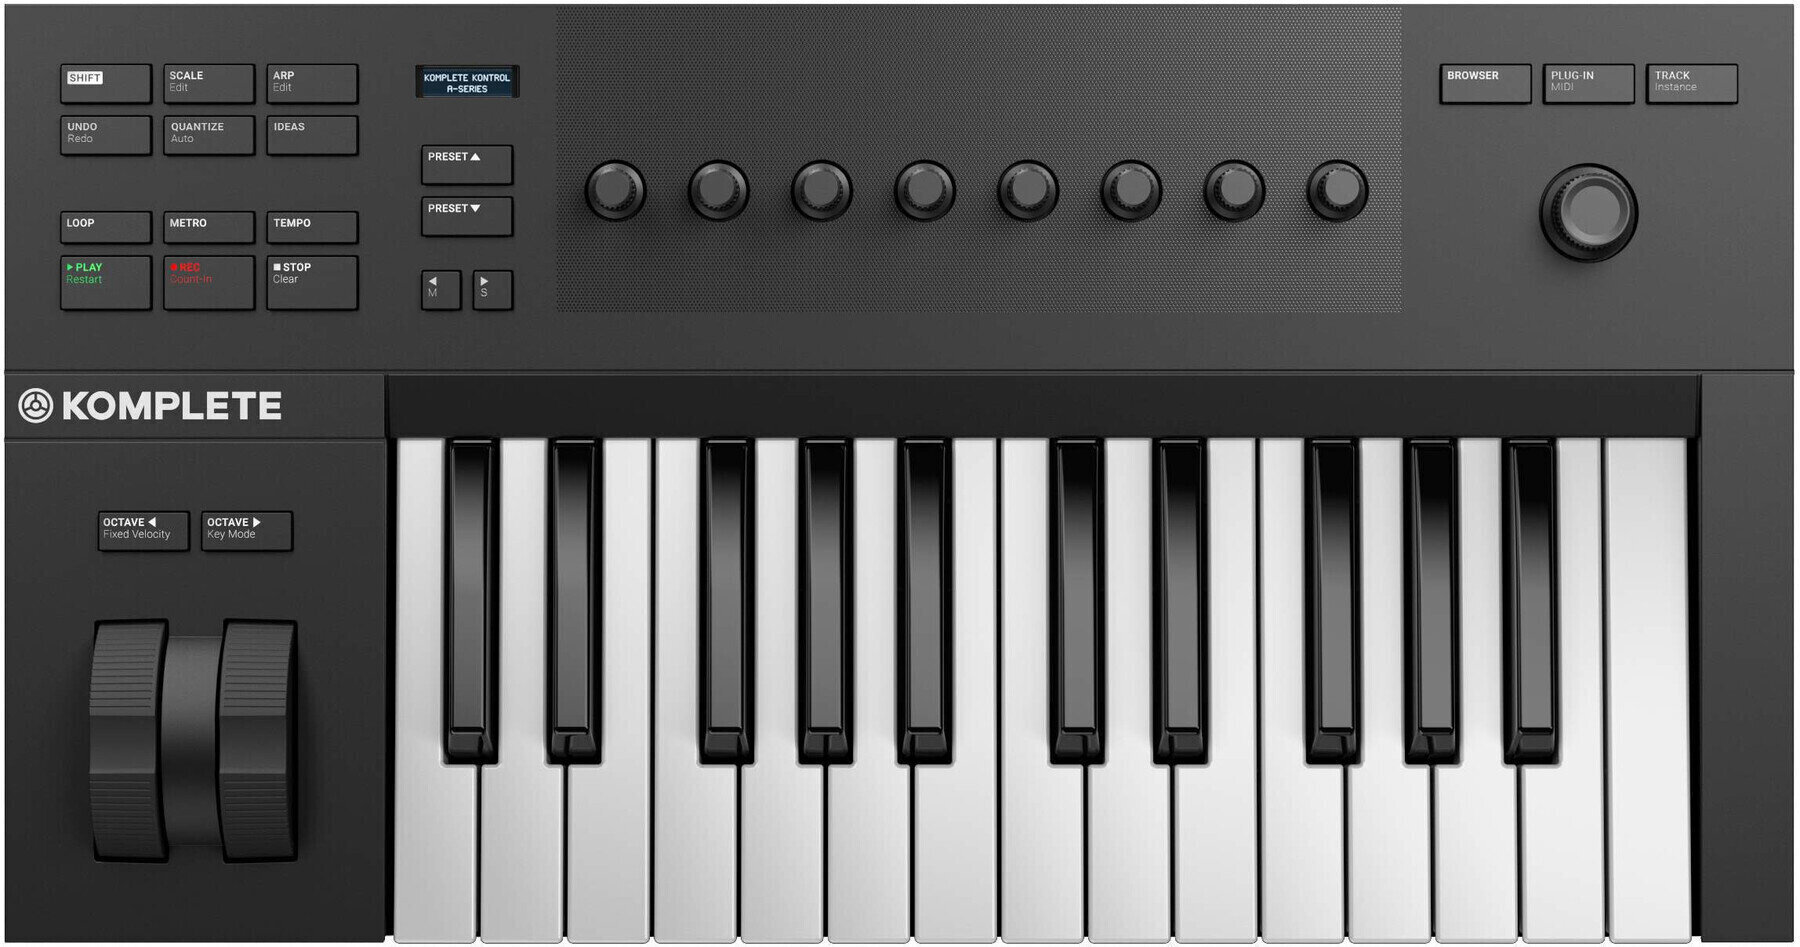 MIDI-Keyboard Native Instruments Komplete Kontrol A25